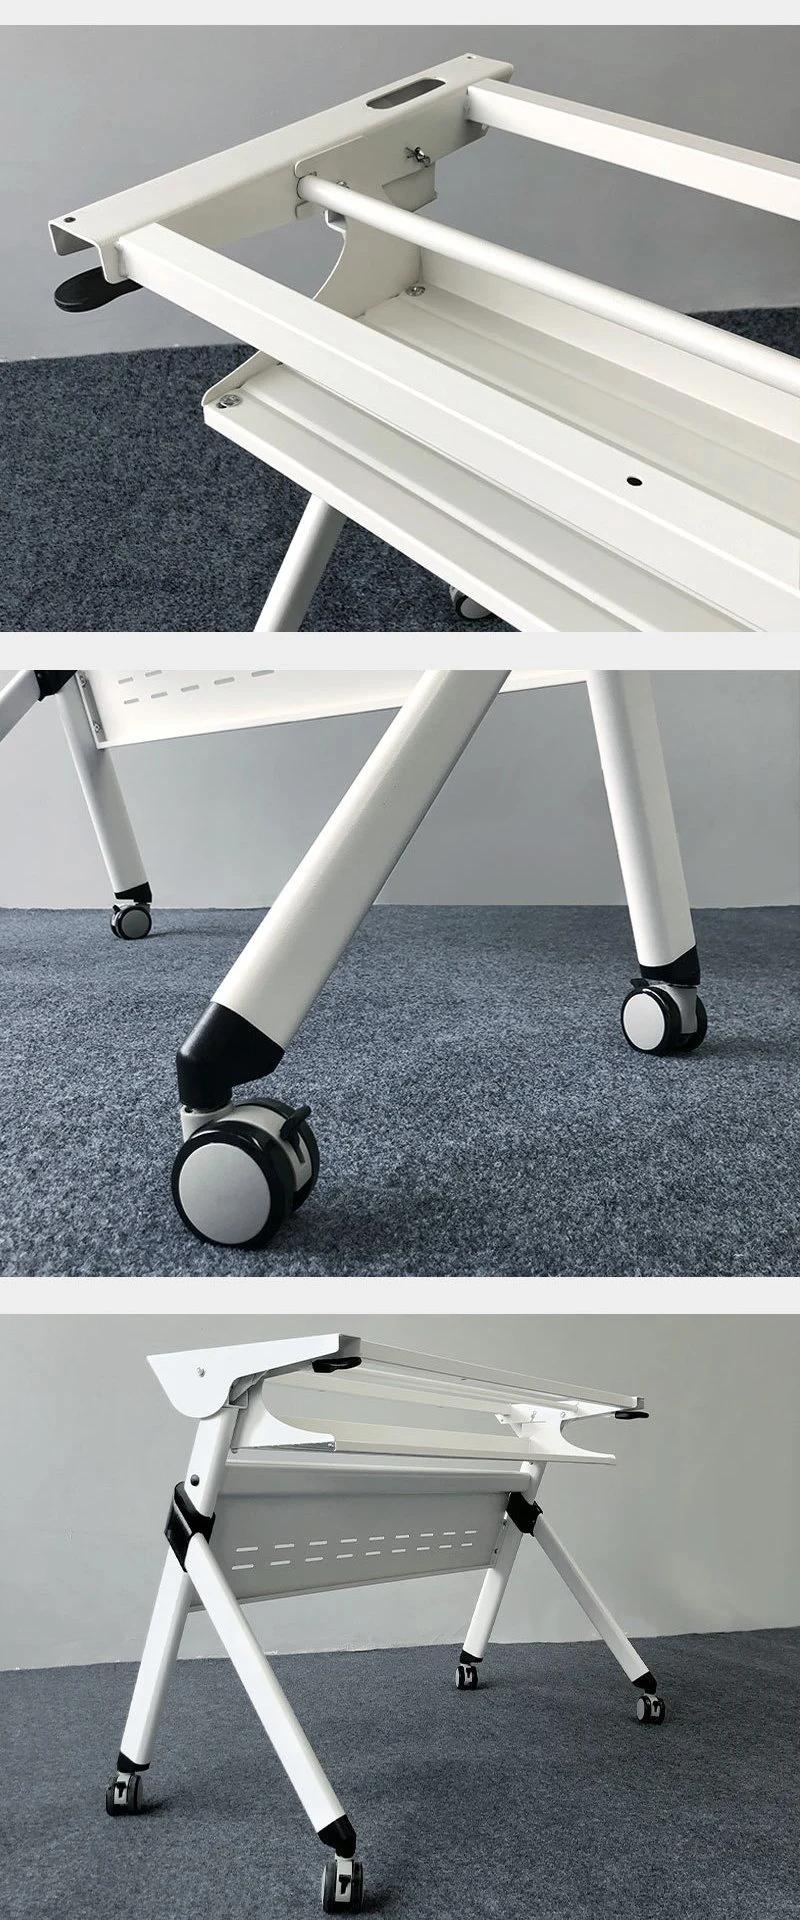 2022 New Design Hot Sale Cheap Price Desk Office Furniture Training Desk Study Desk Adjustable Desk Office Desk